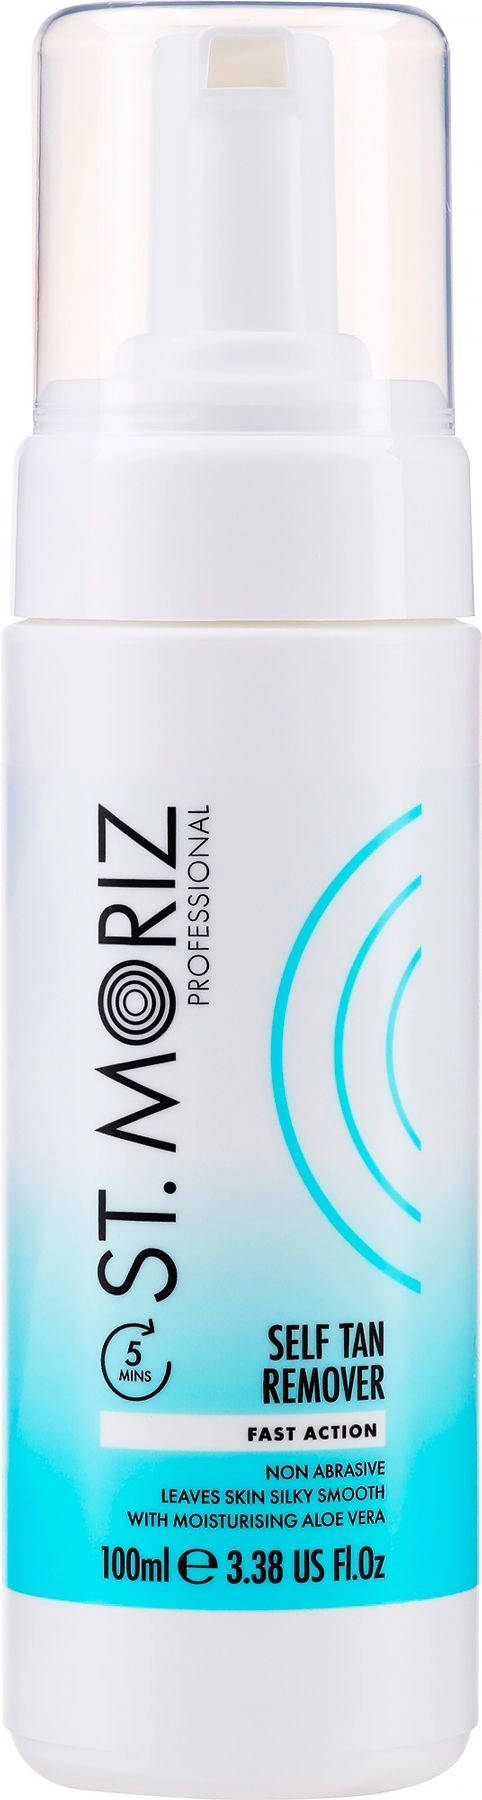 Пенка для удаления автозагара - St. Moriz Professional Self Tan Remover, 100 мл - фото N1